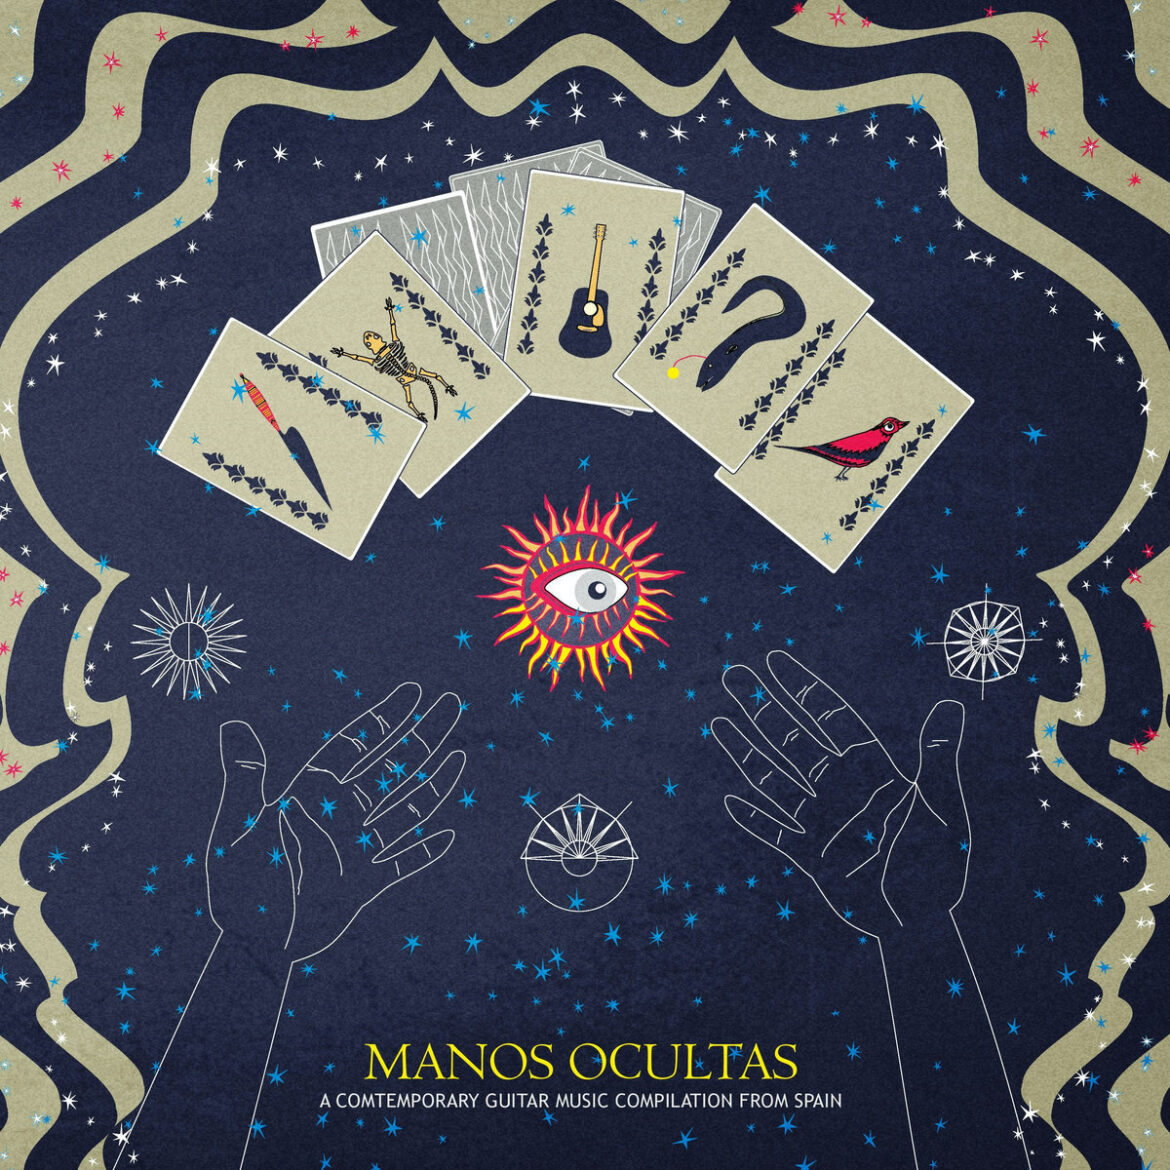 essential-new-music:-various-artists-“manos-ocultas:-a-contemporary-guitar-music-compilation-from-spain”